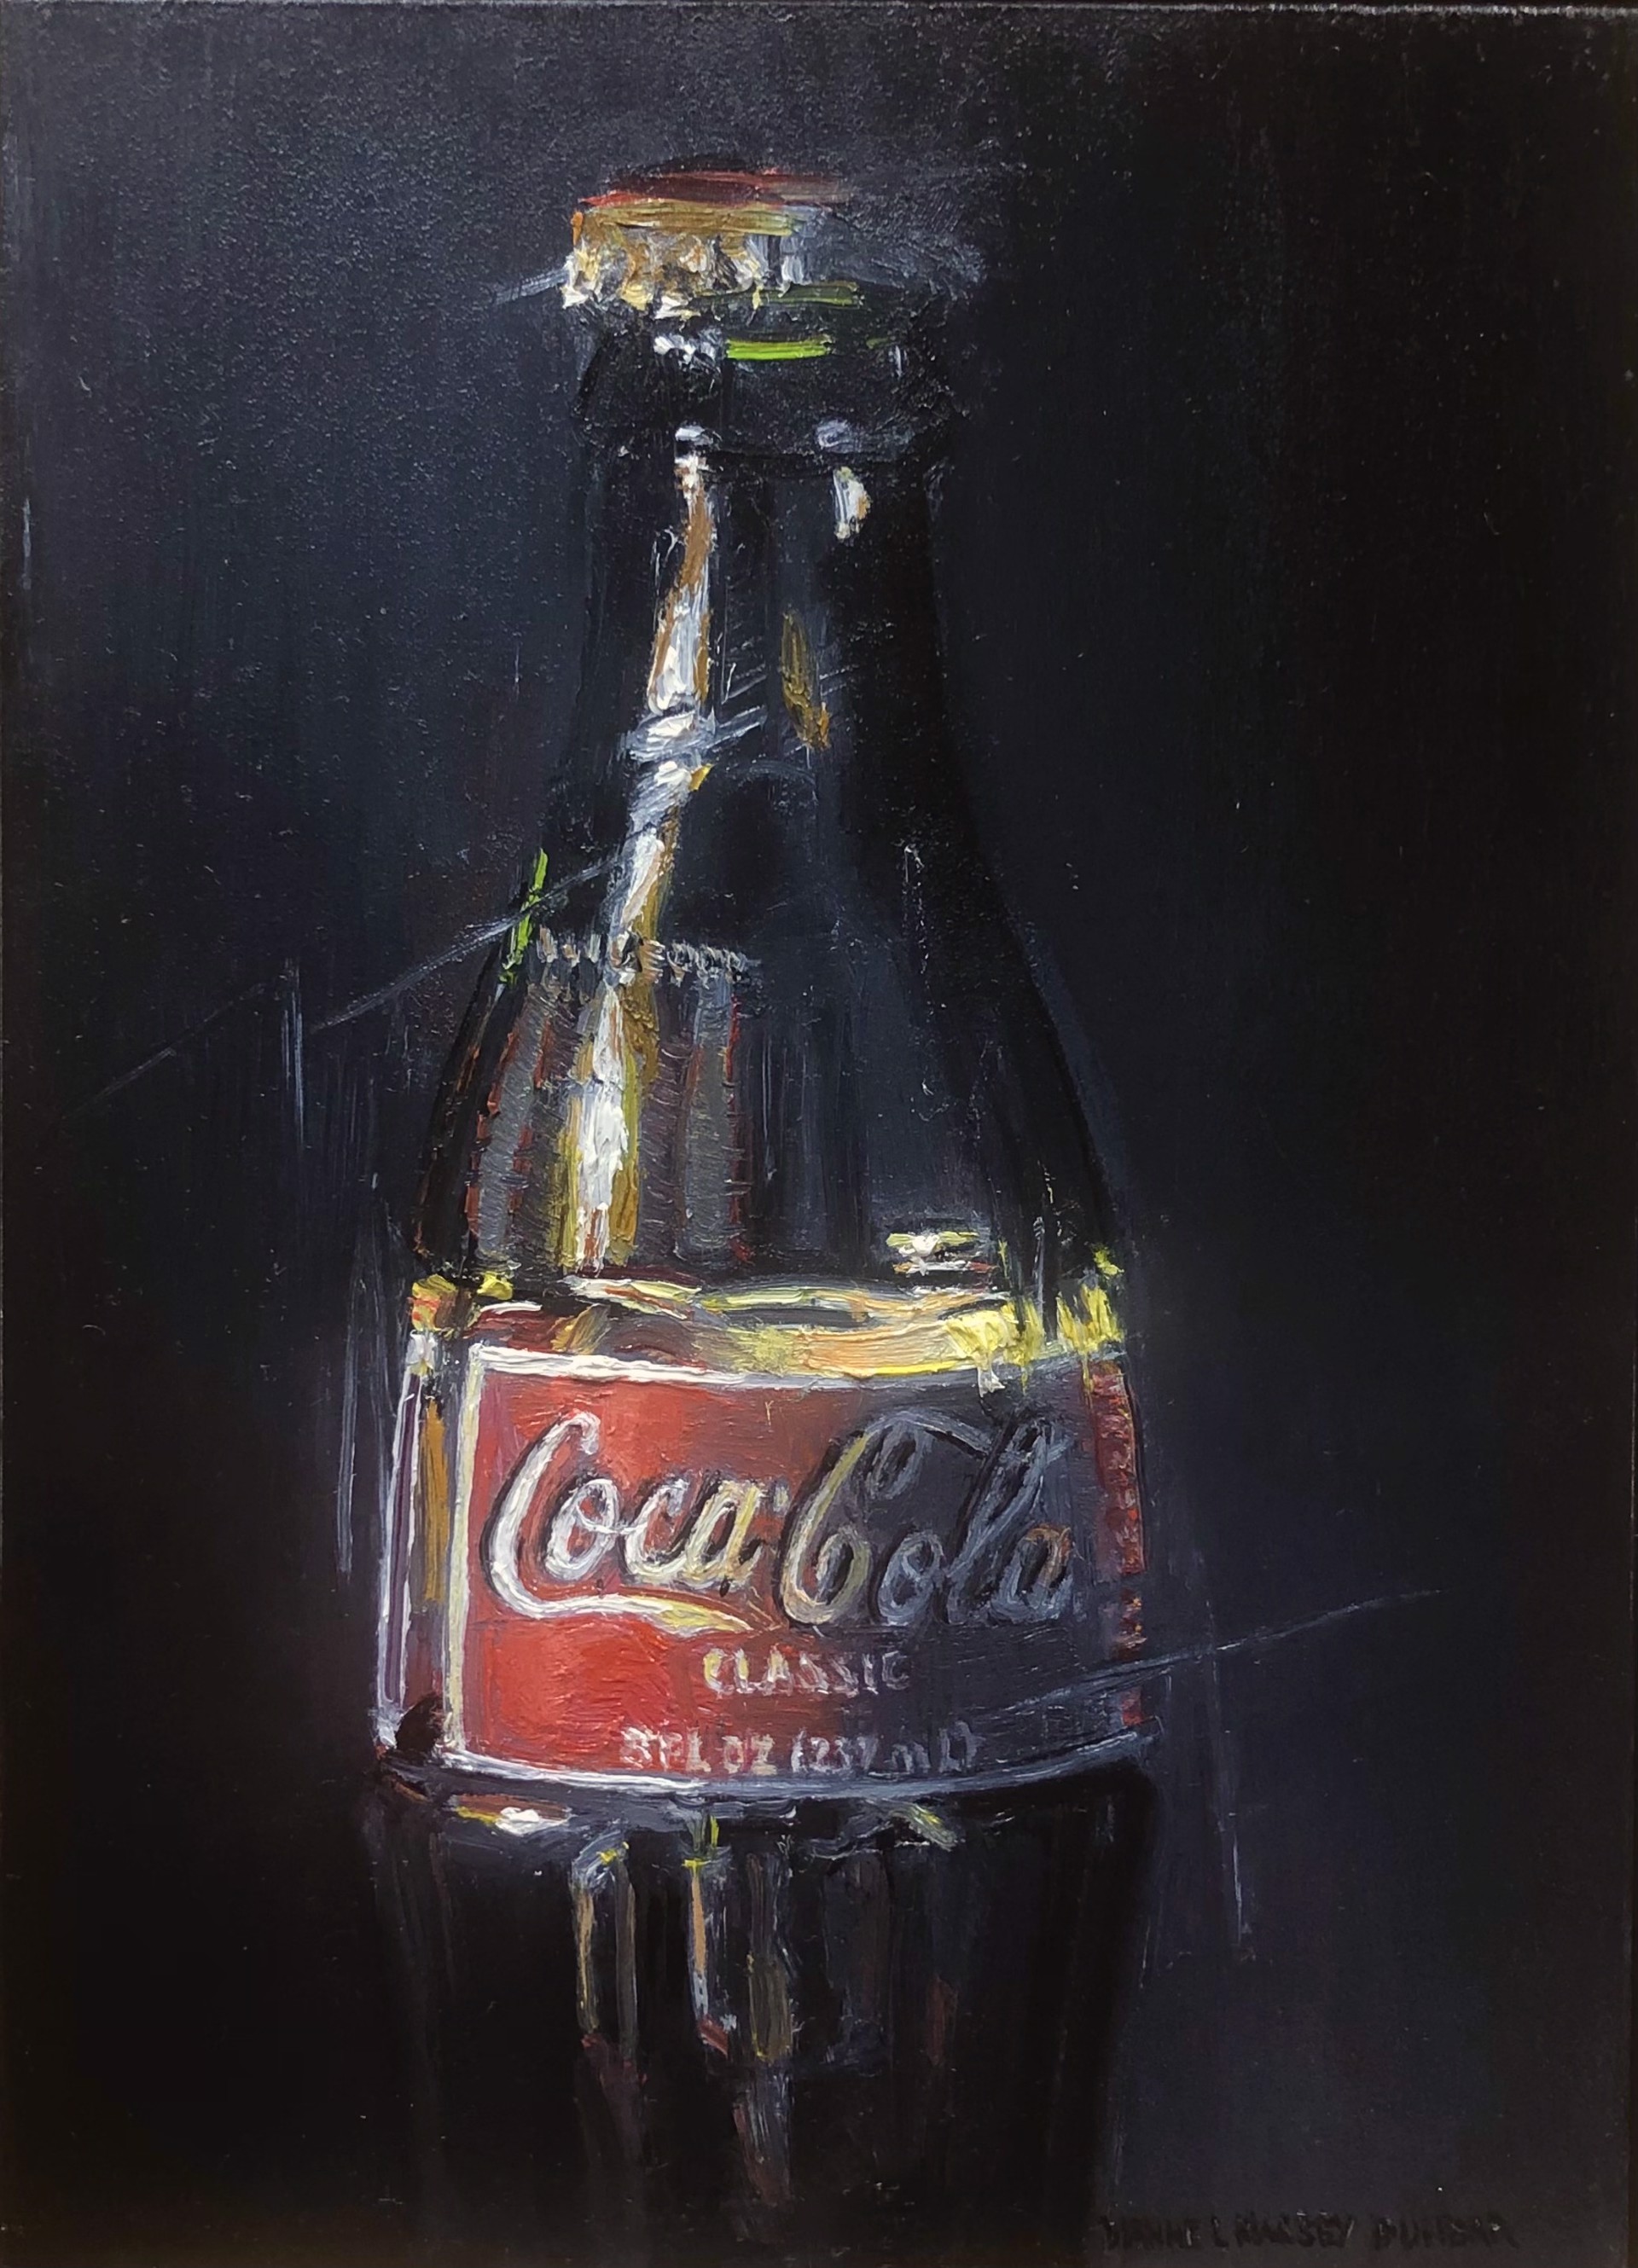 Coca Cola Classic by Dianne L Massey Dunbar